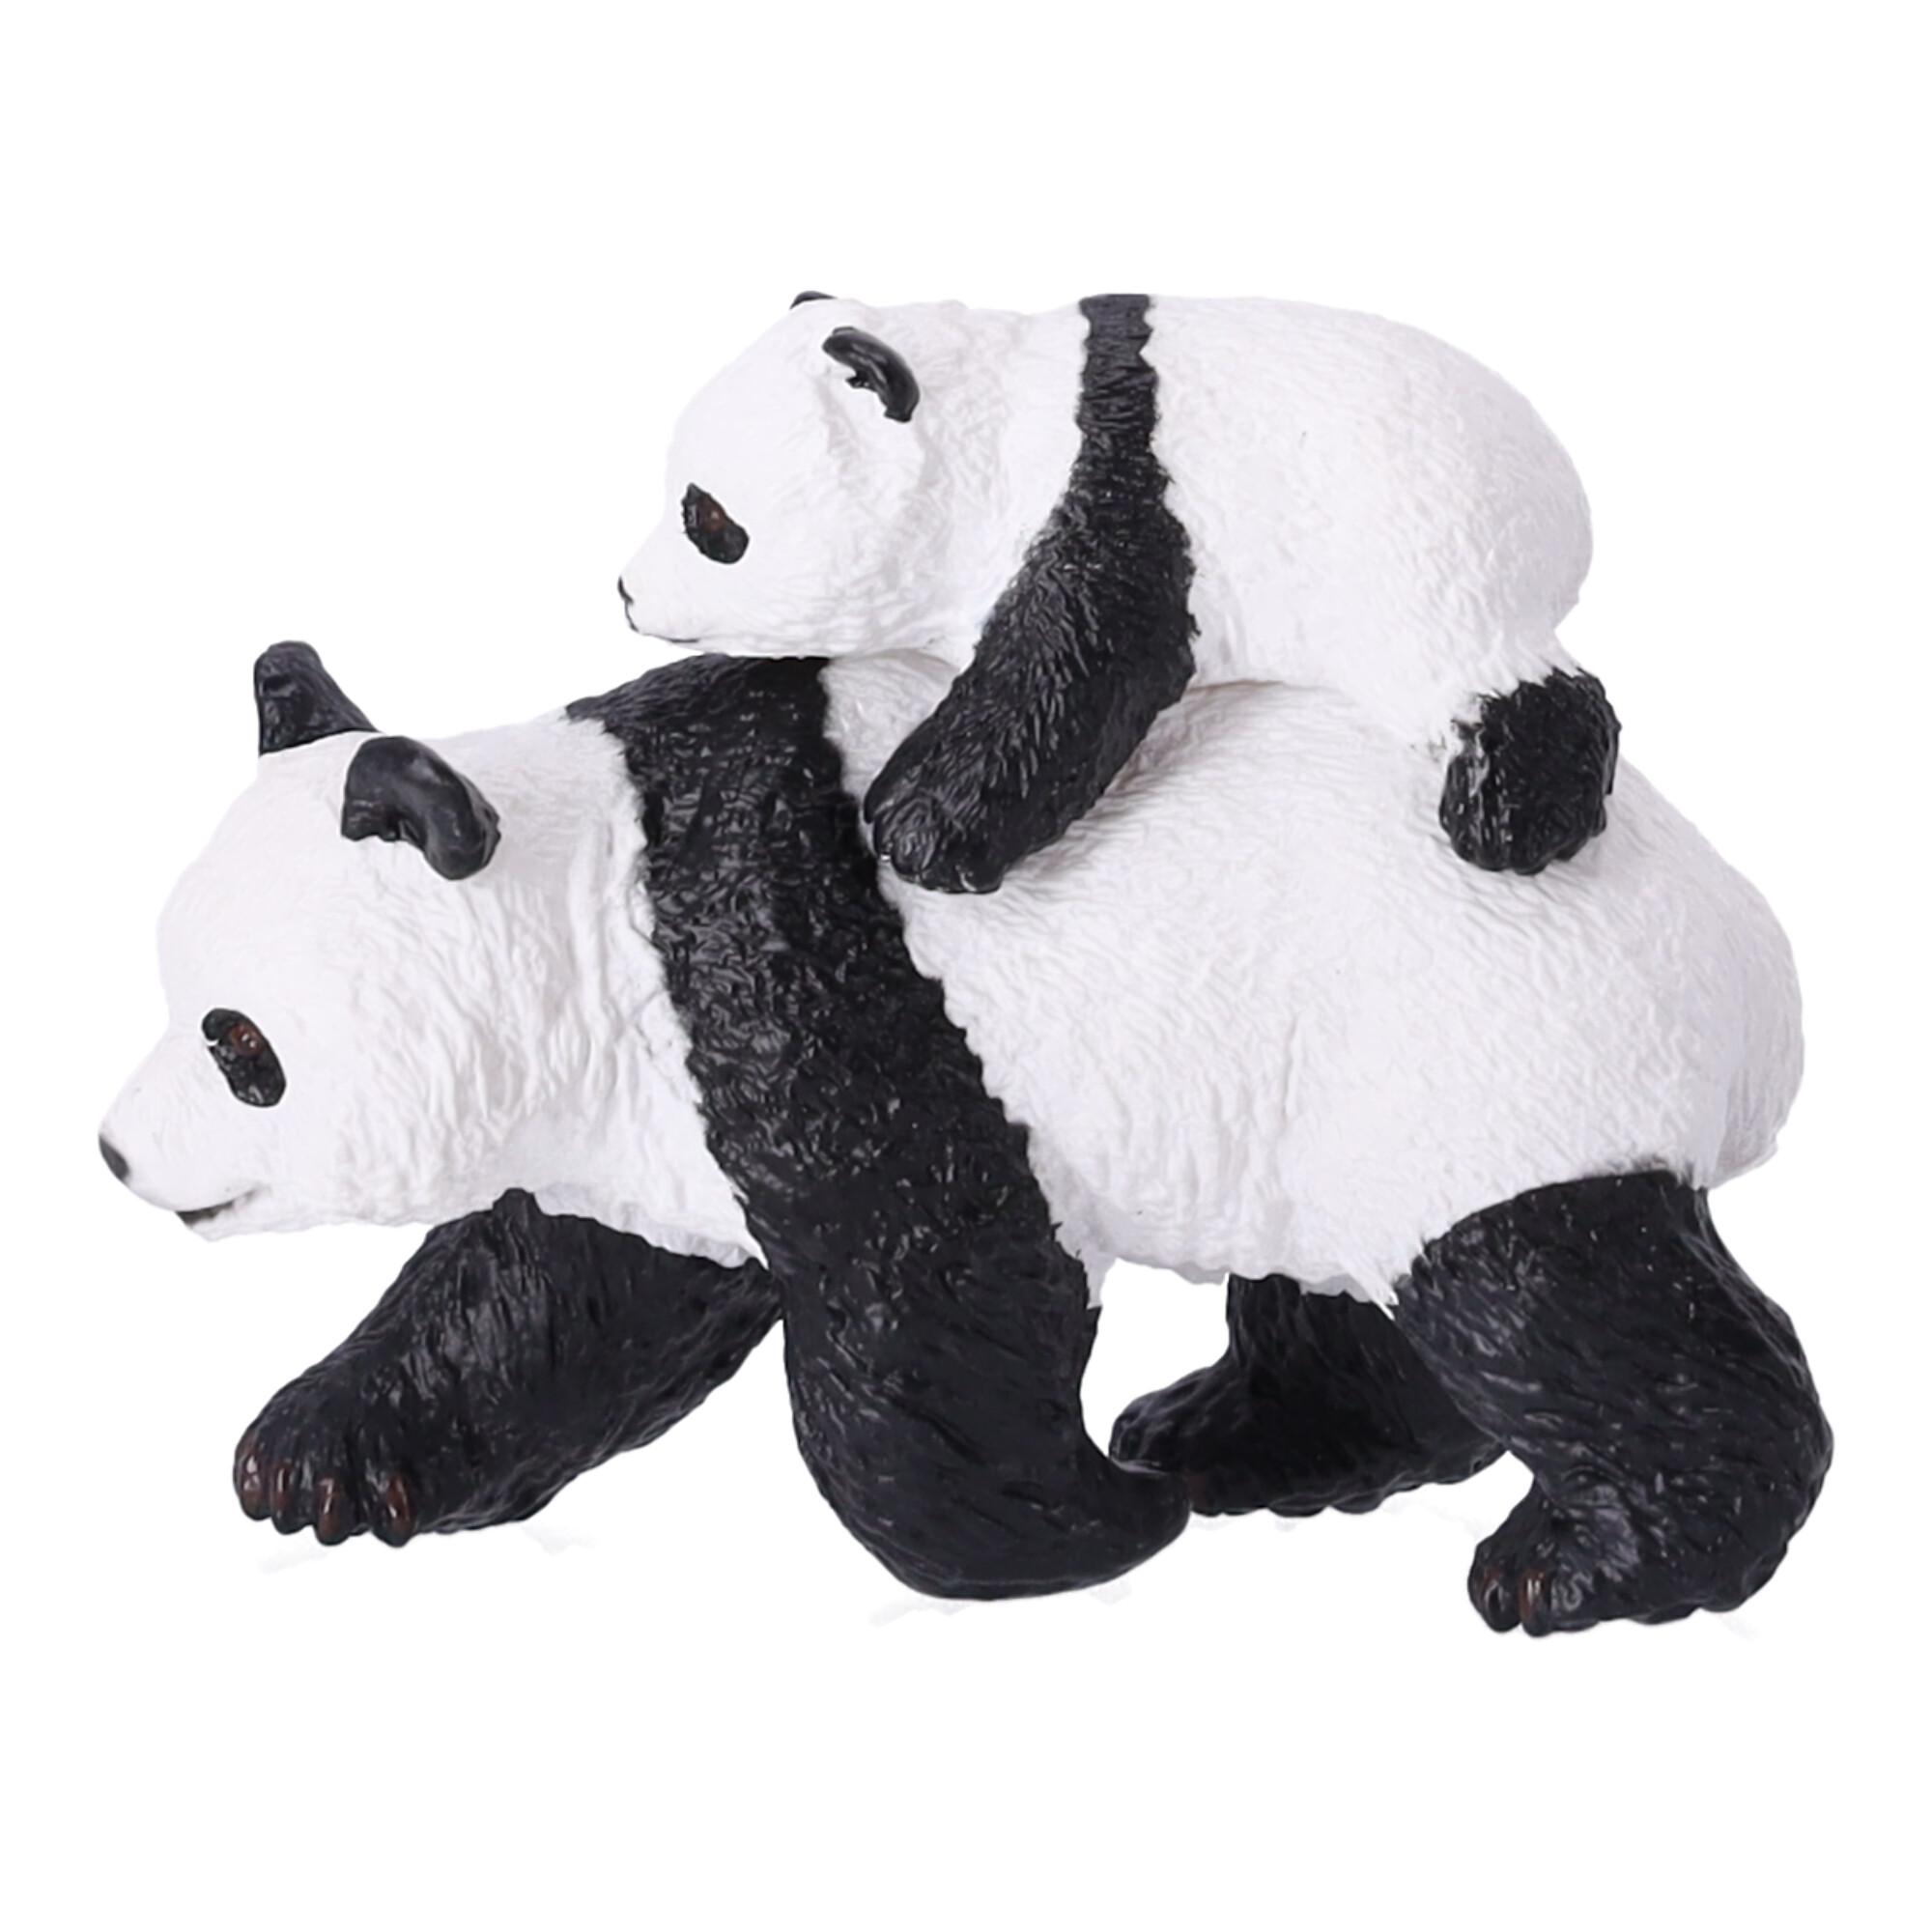 Collectible figurine Panda and baby panda, Papo